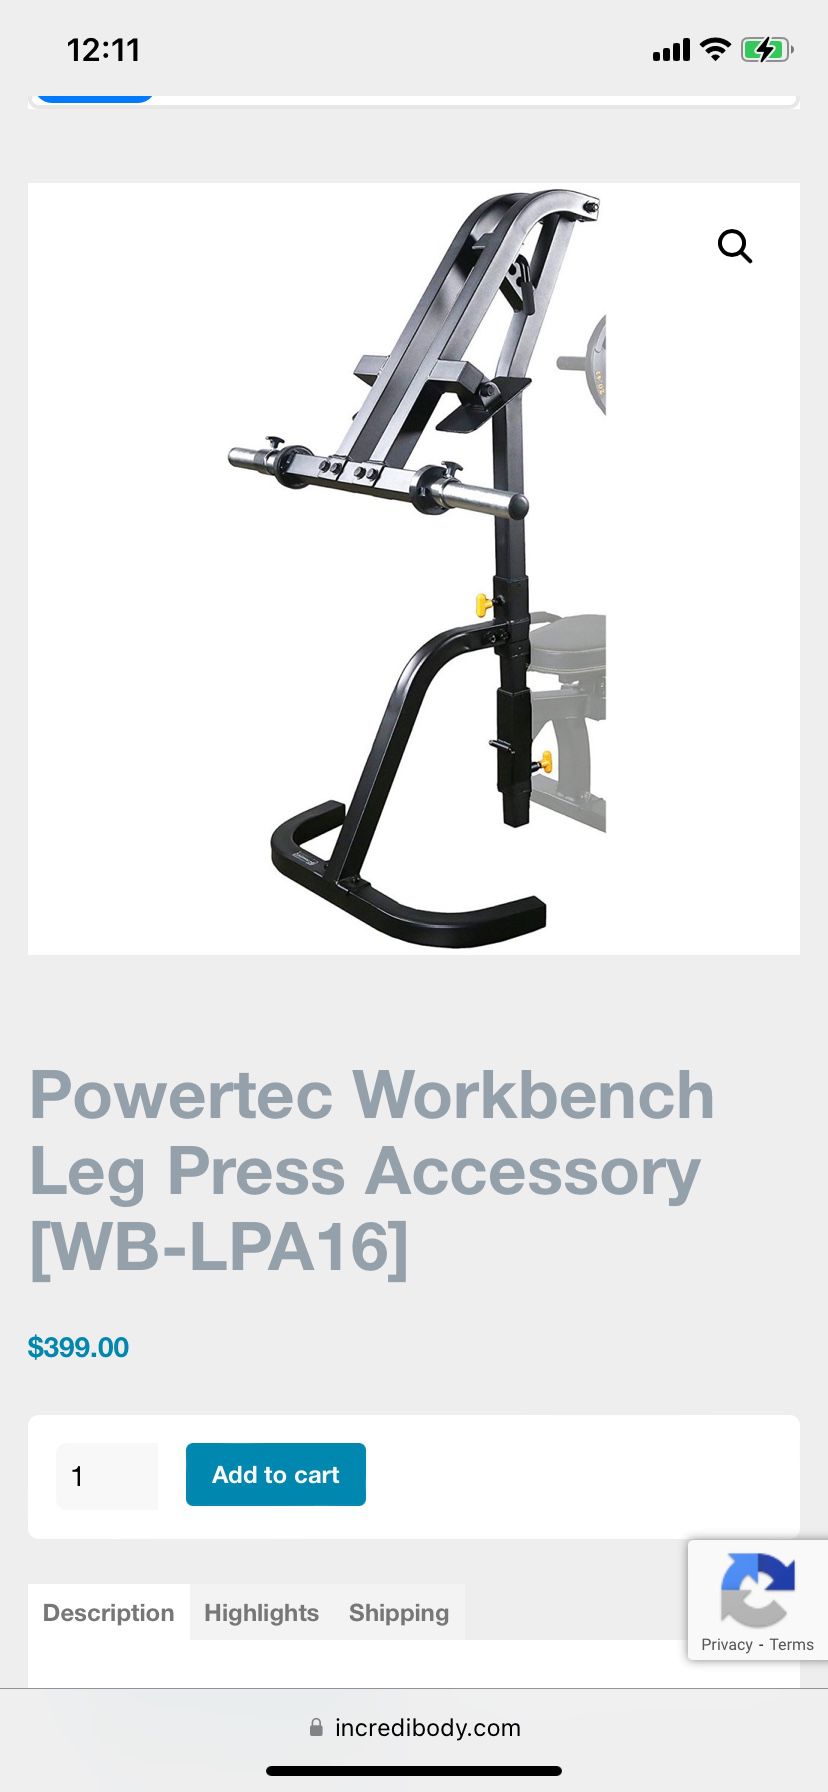 Powertec Workbench Leg Press Accessory 